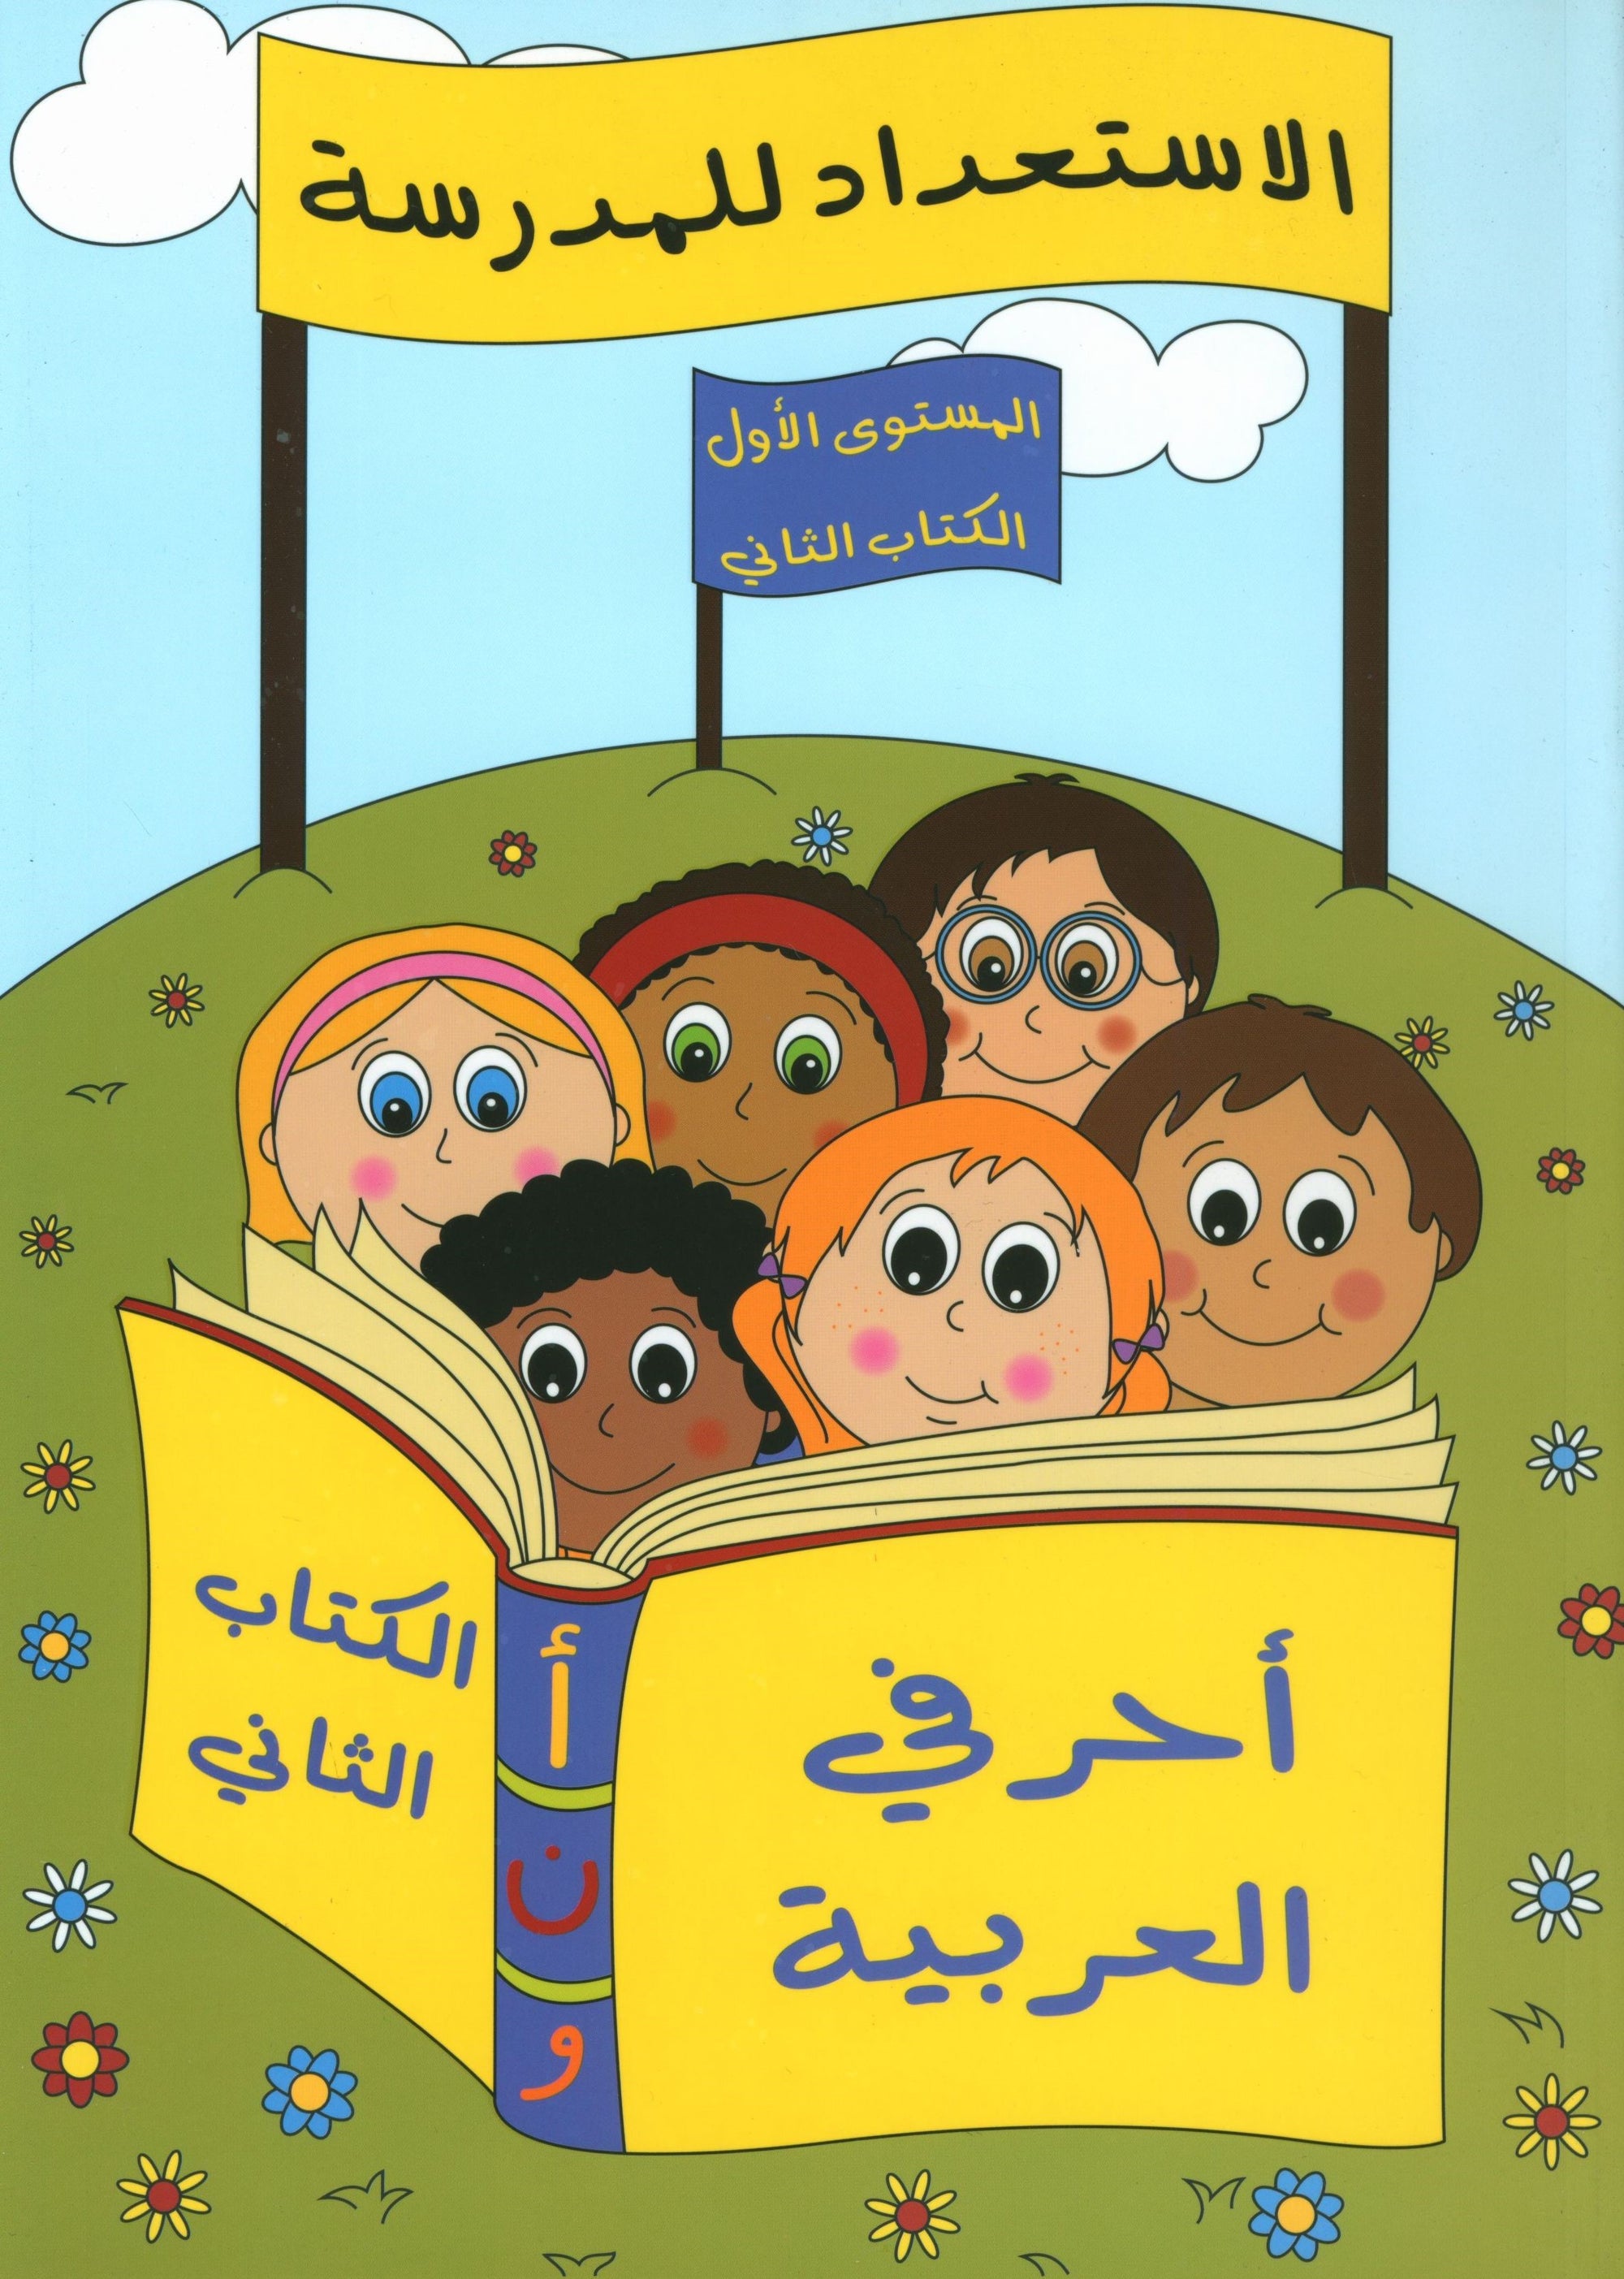 Preparing for School - My Arabic Letters Part 2 الاستعداد للمدرسة - أحرفي العربية